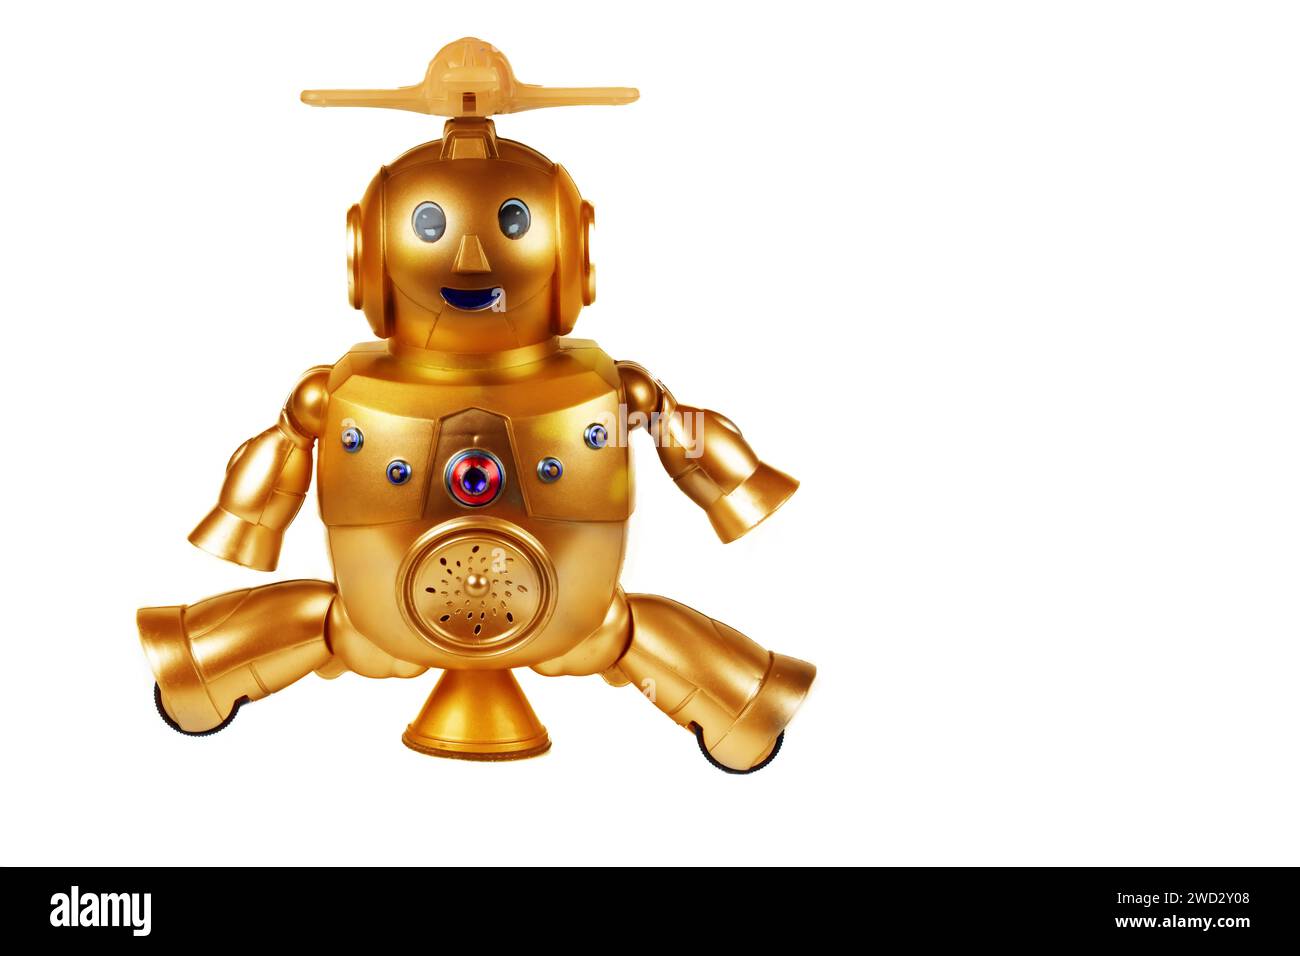 Golden toy robot isolated on white background. Dear vintage robot. Robotics. Stock Photo